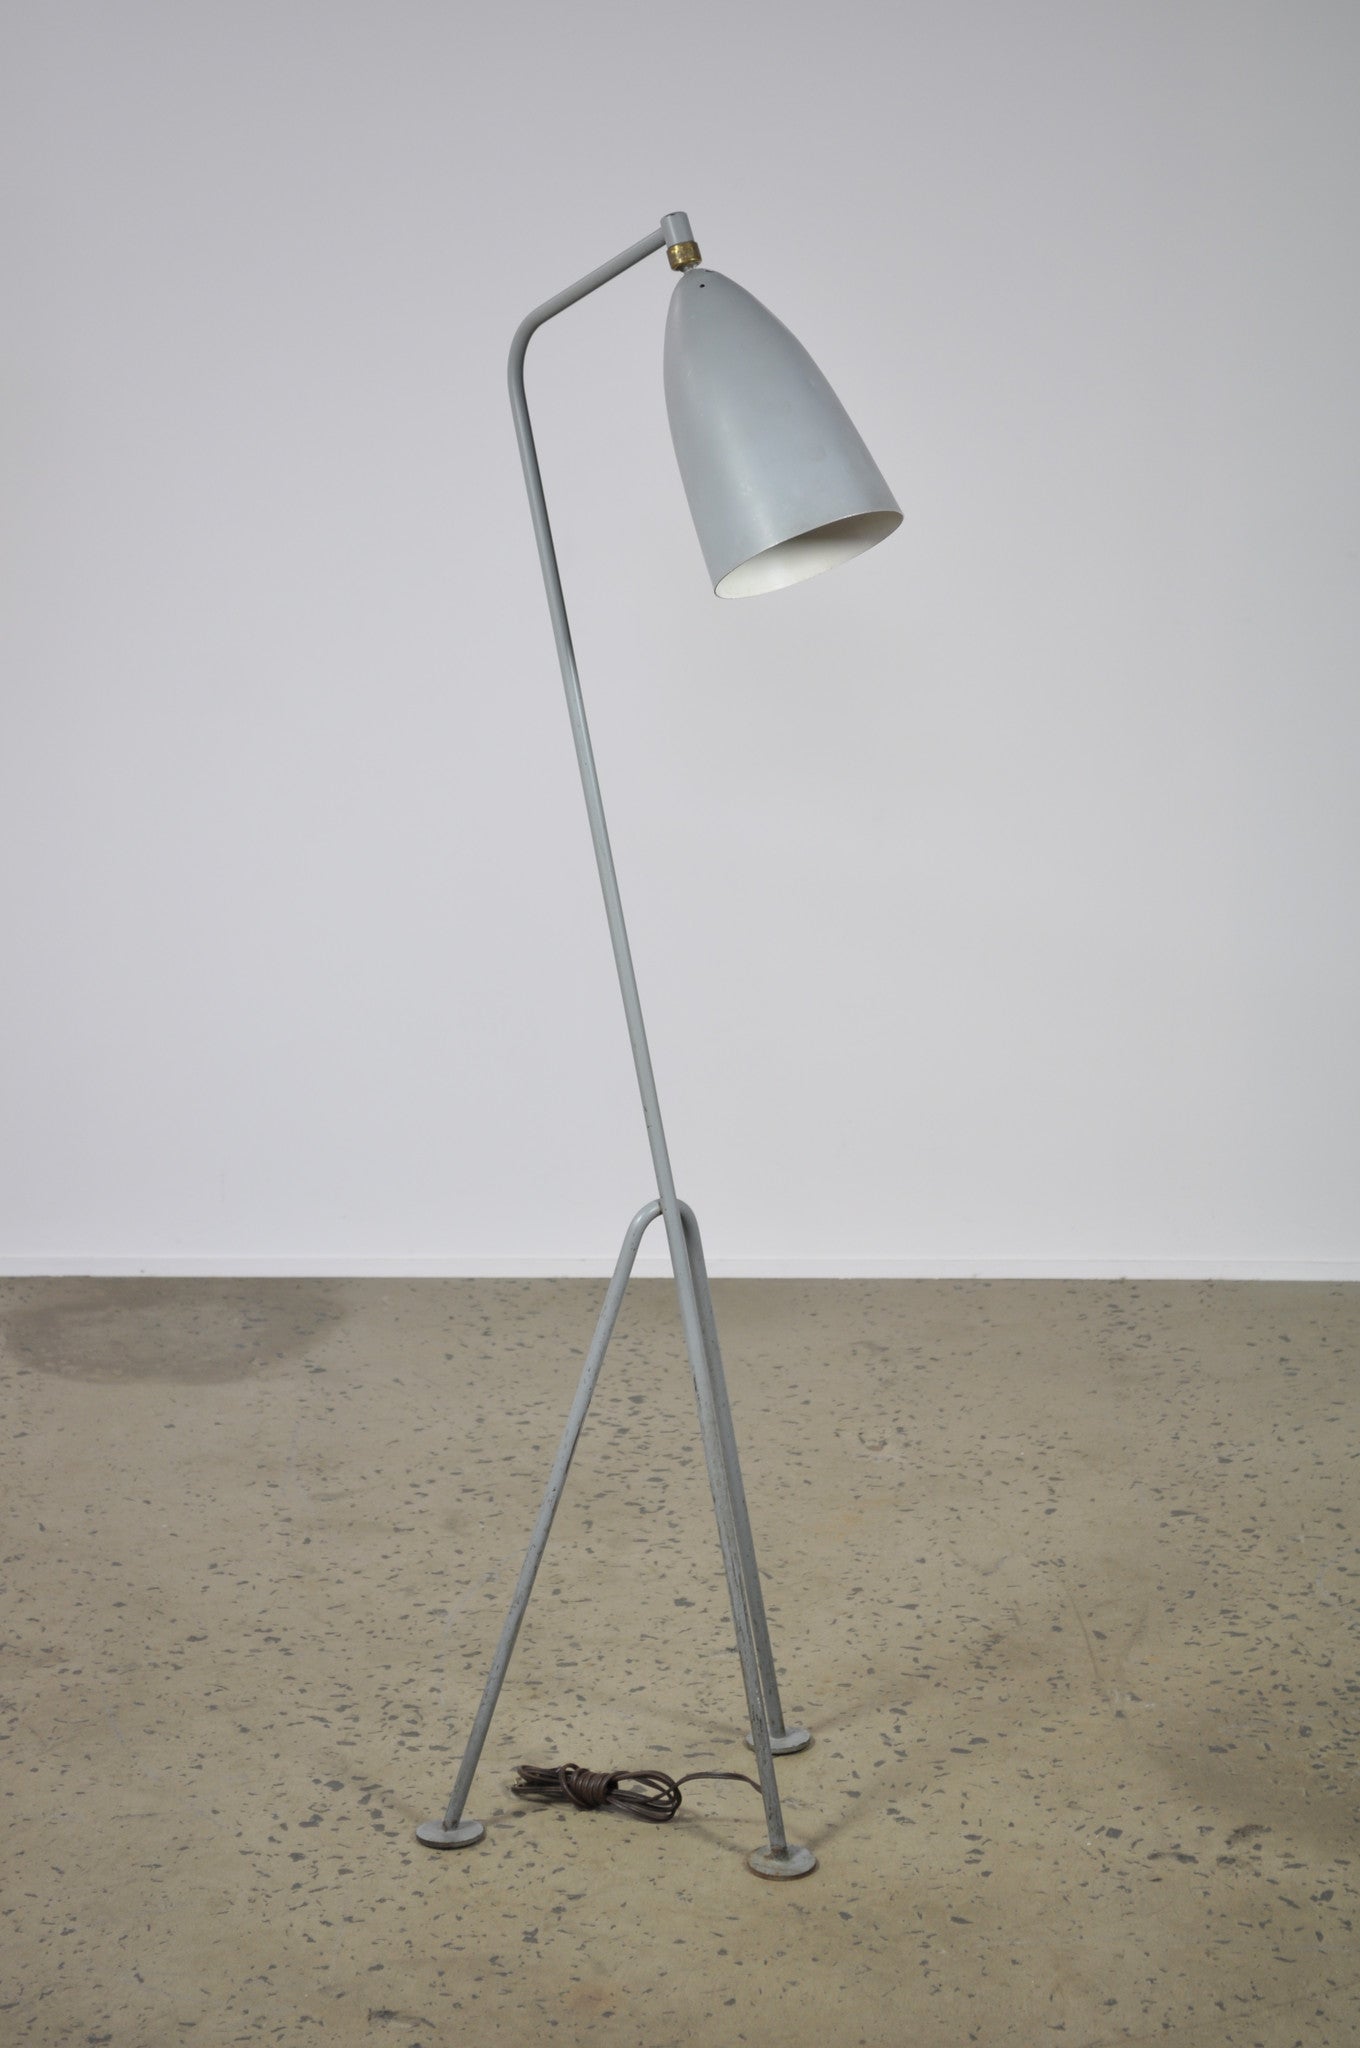 Greta Grossman Gräshoppa floor lamp